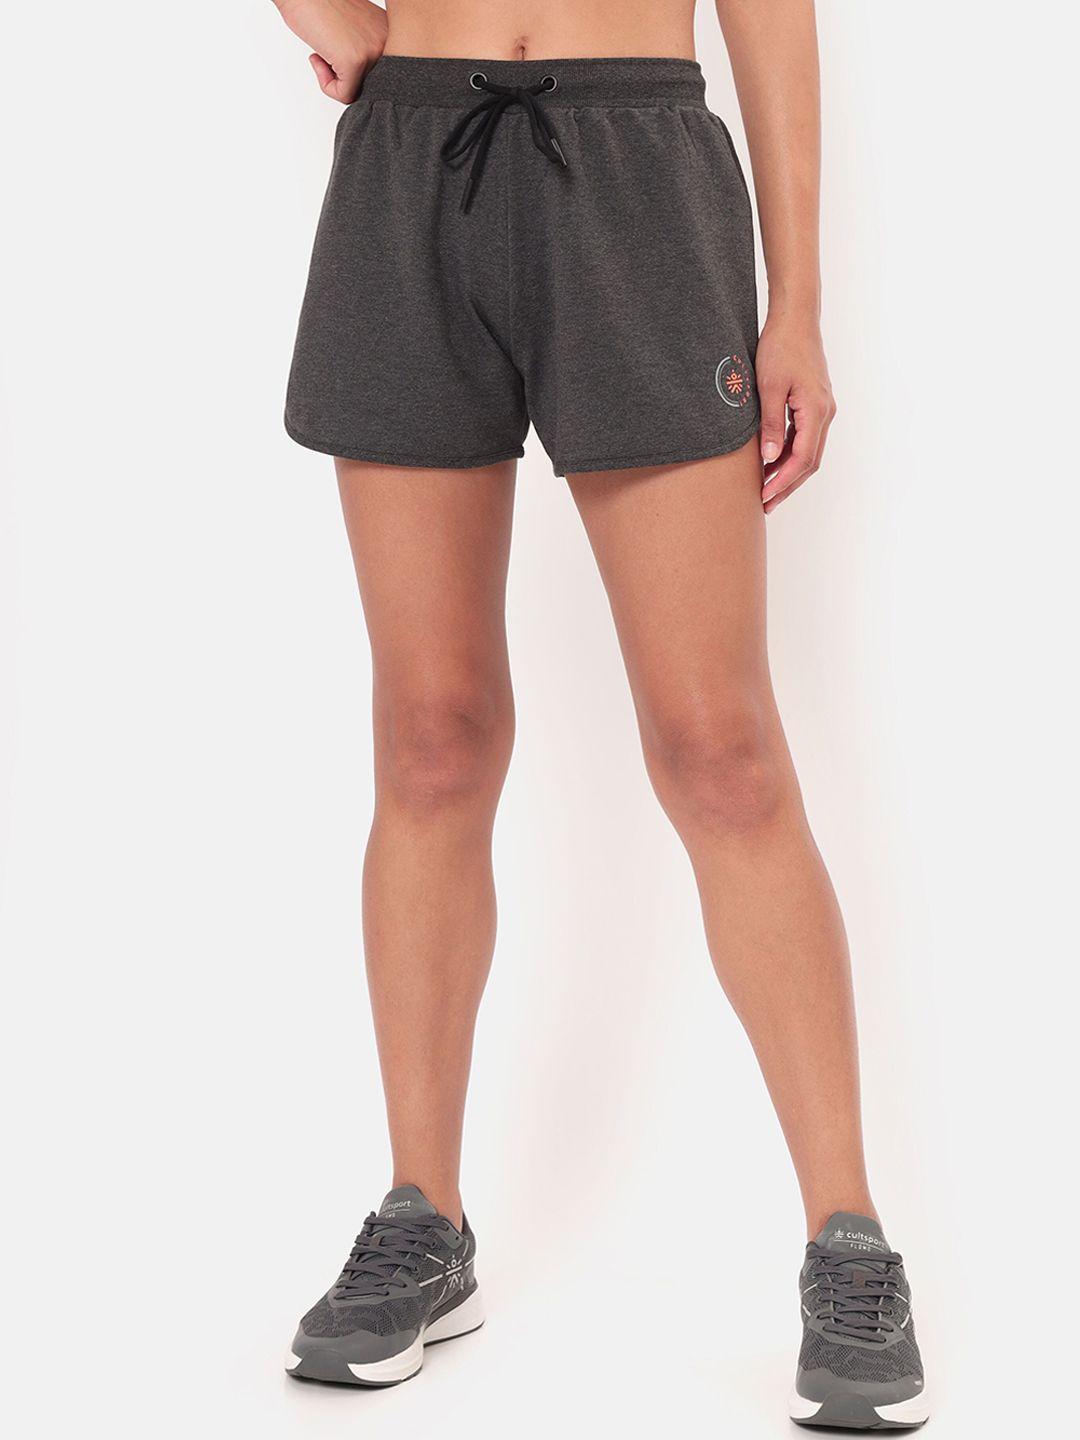 cultsport women grey logo printed shorts